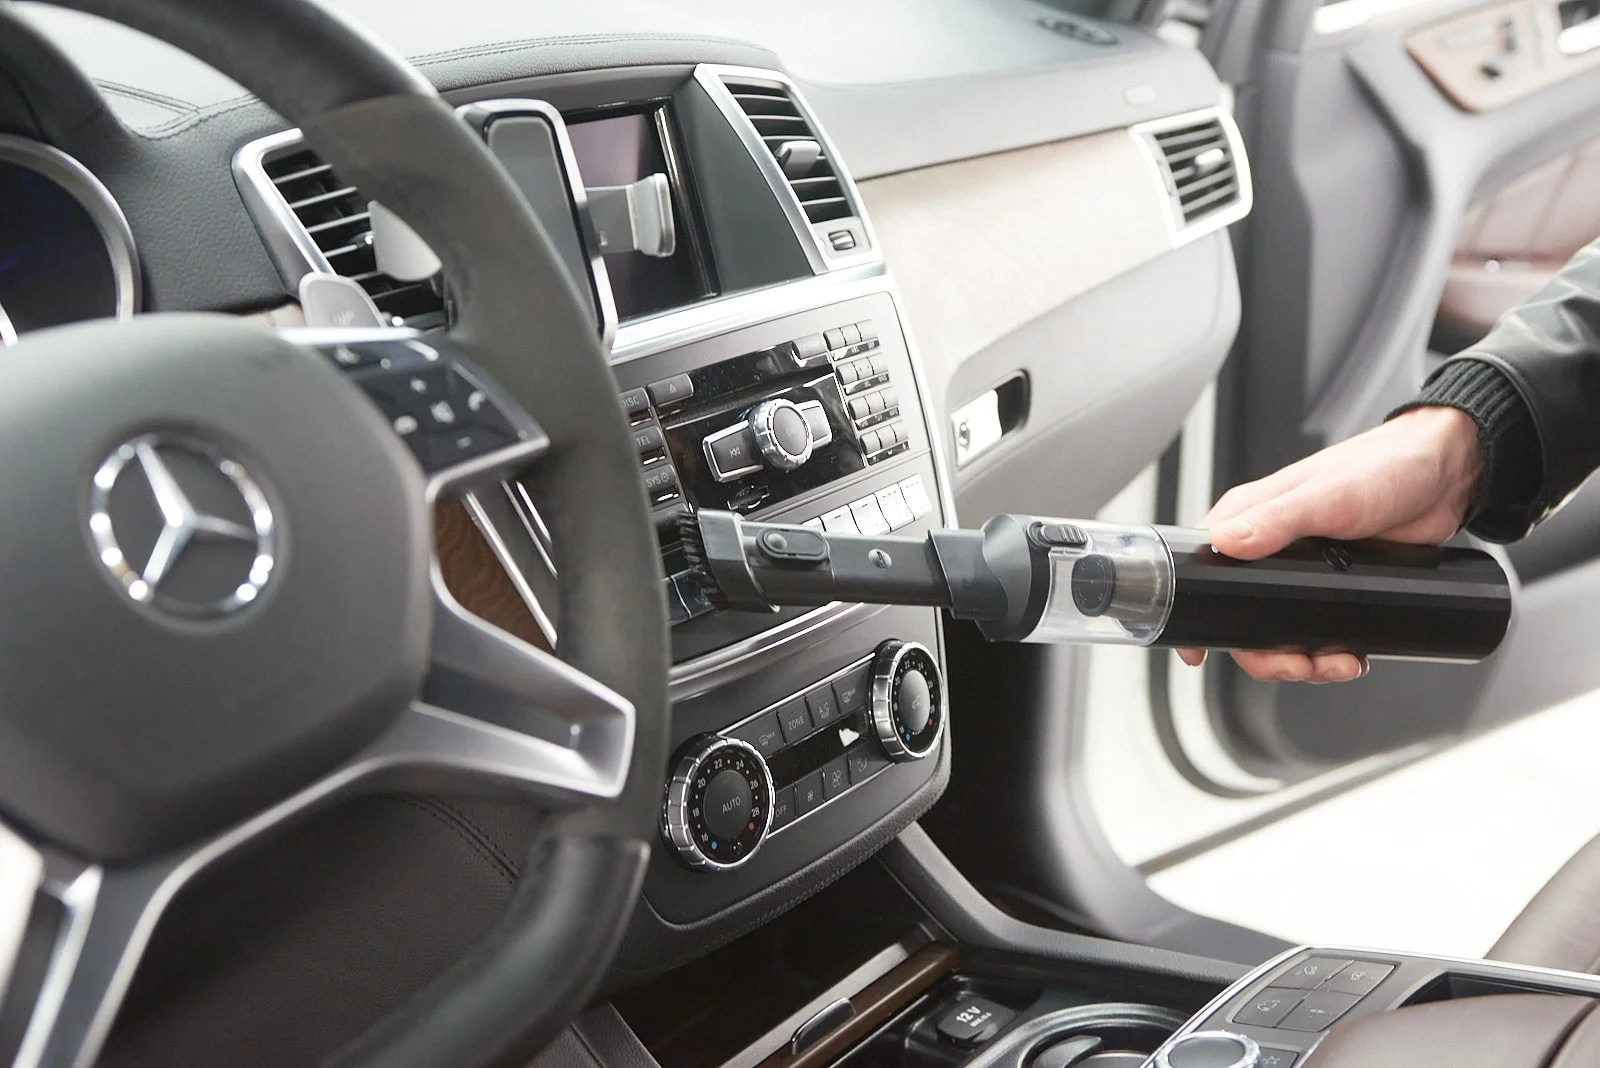 wireless handheld car vacuum cleaner for Toyota Sienna